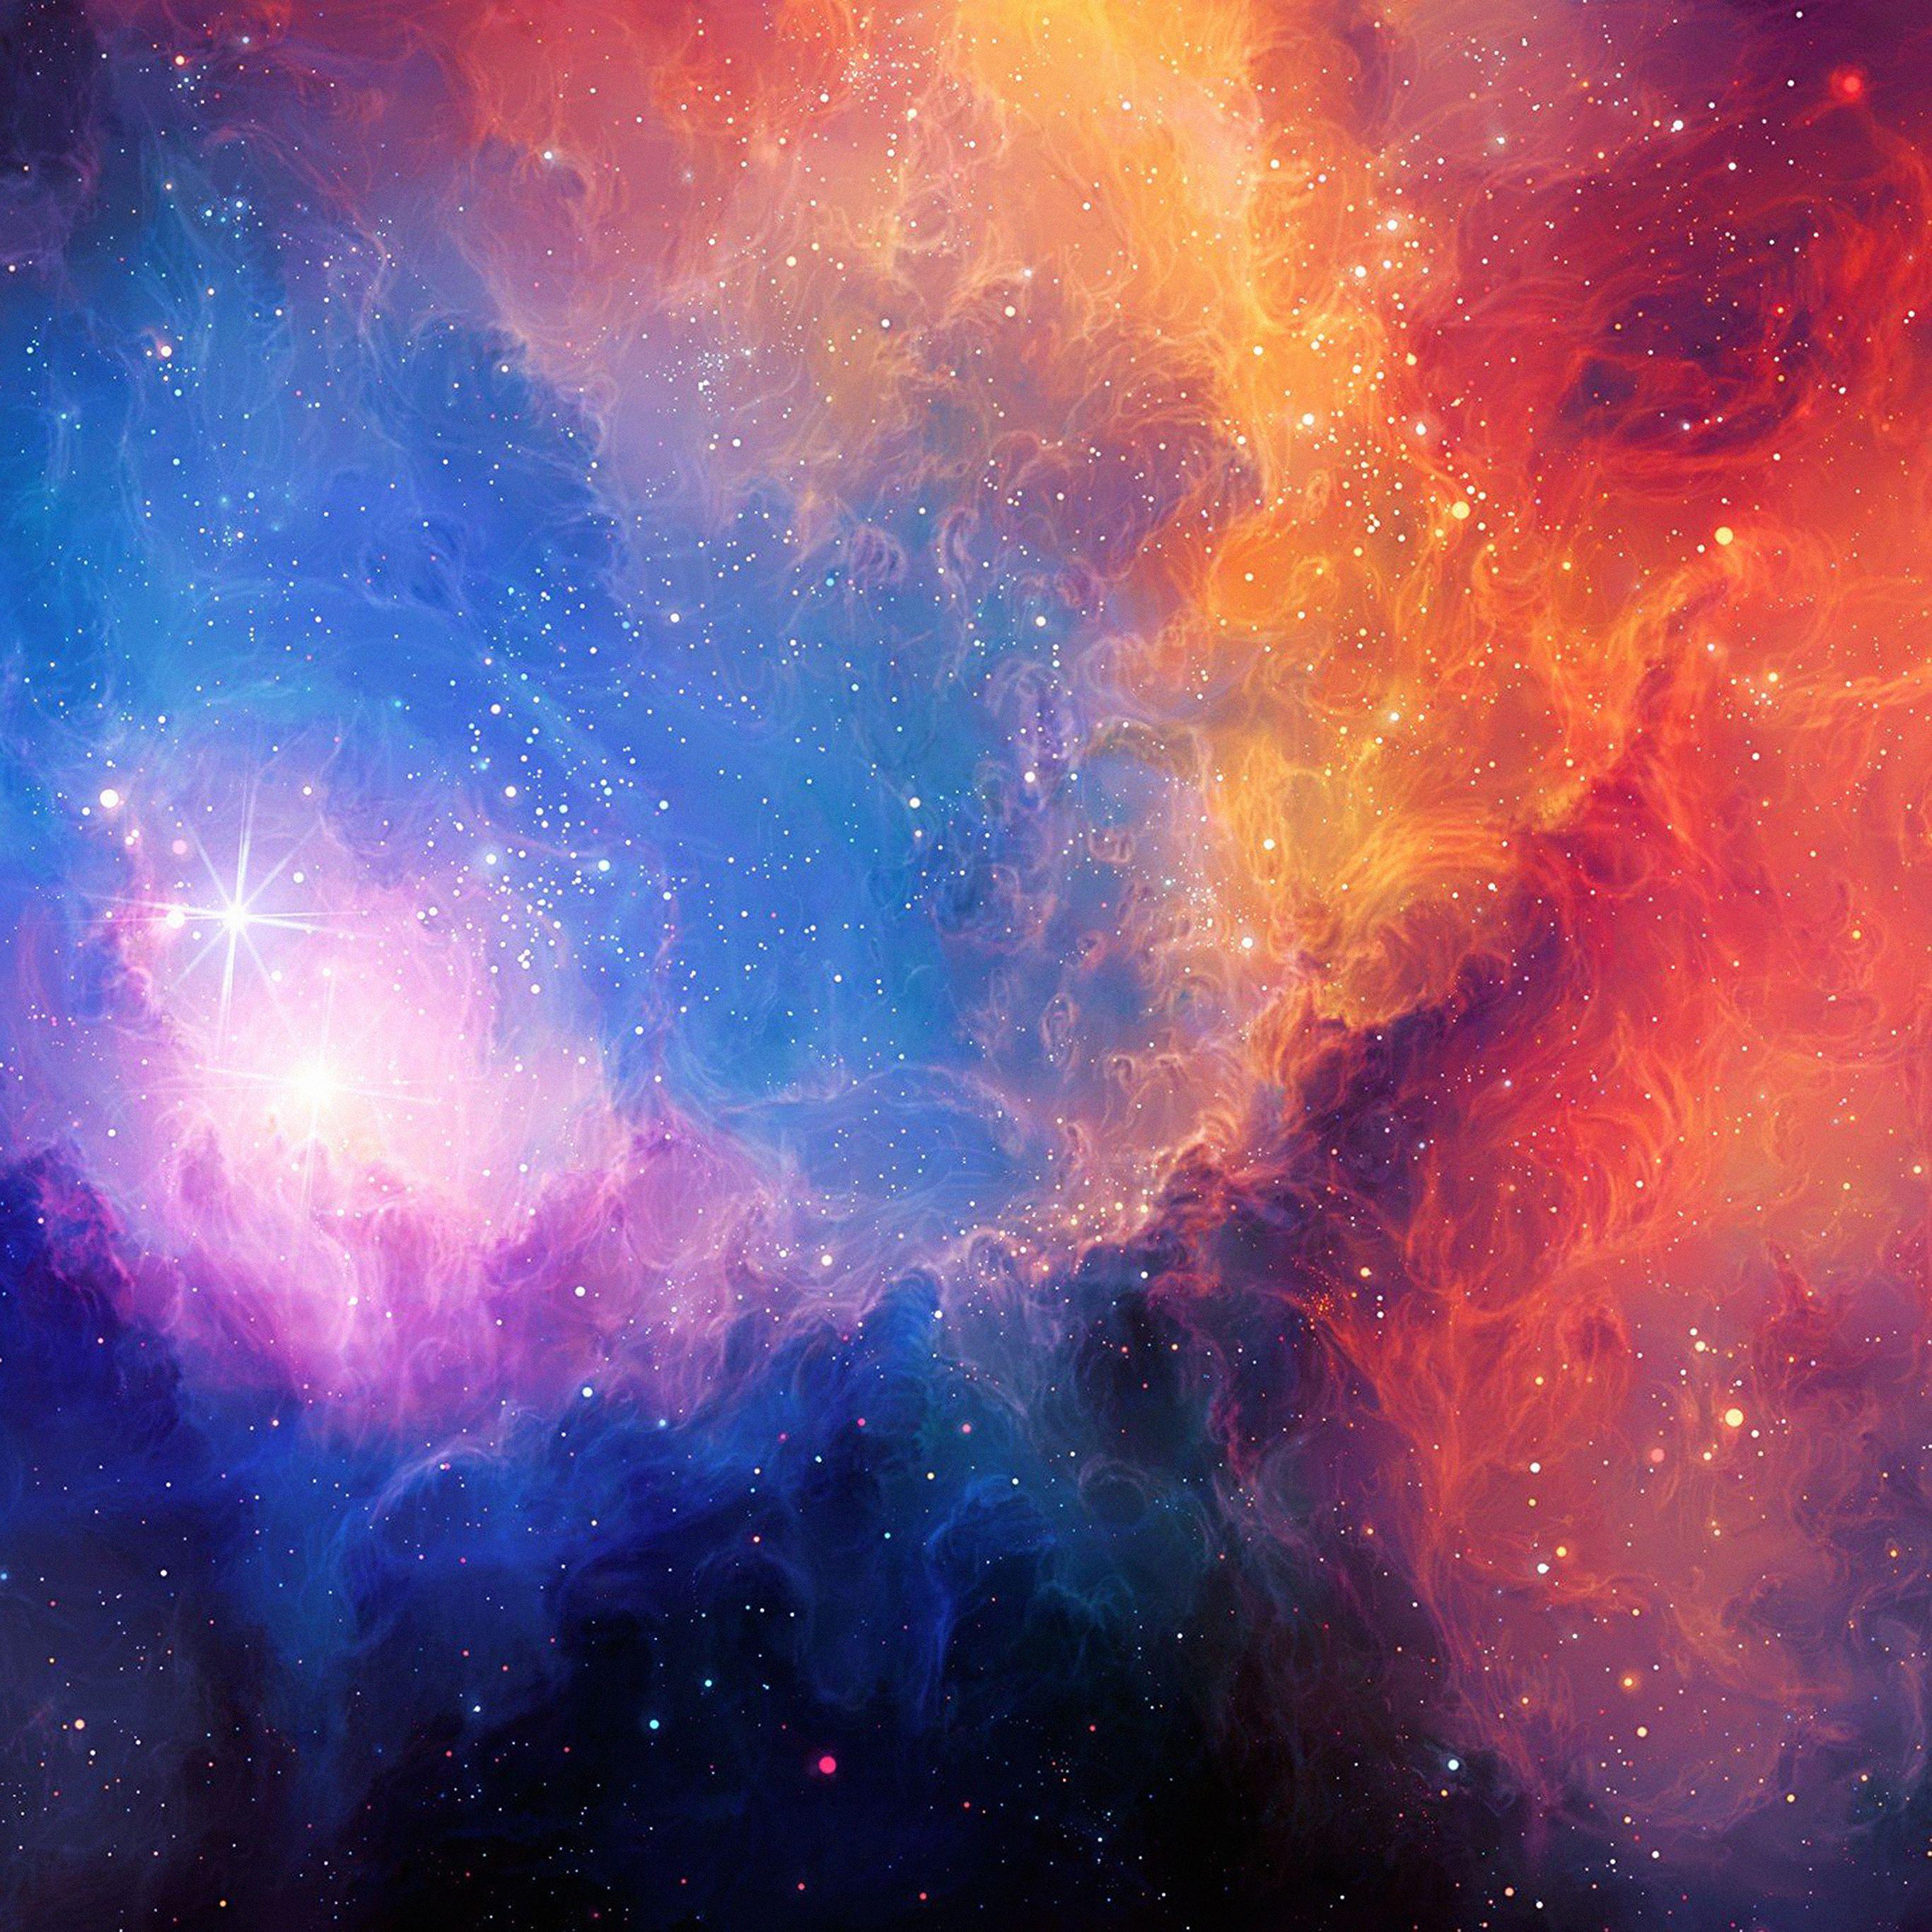 Rainbow Galaxy Wallpapers - Top Free Rainbow Galaxy Backgrounds ...